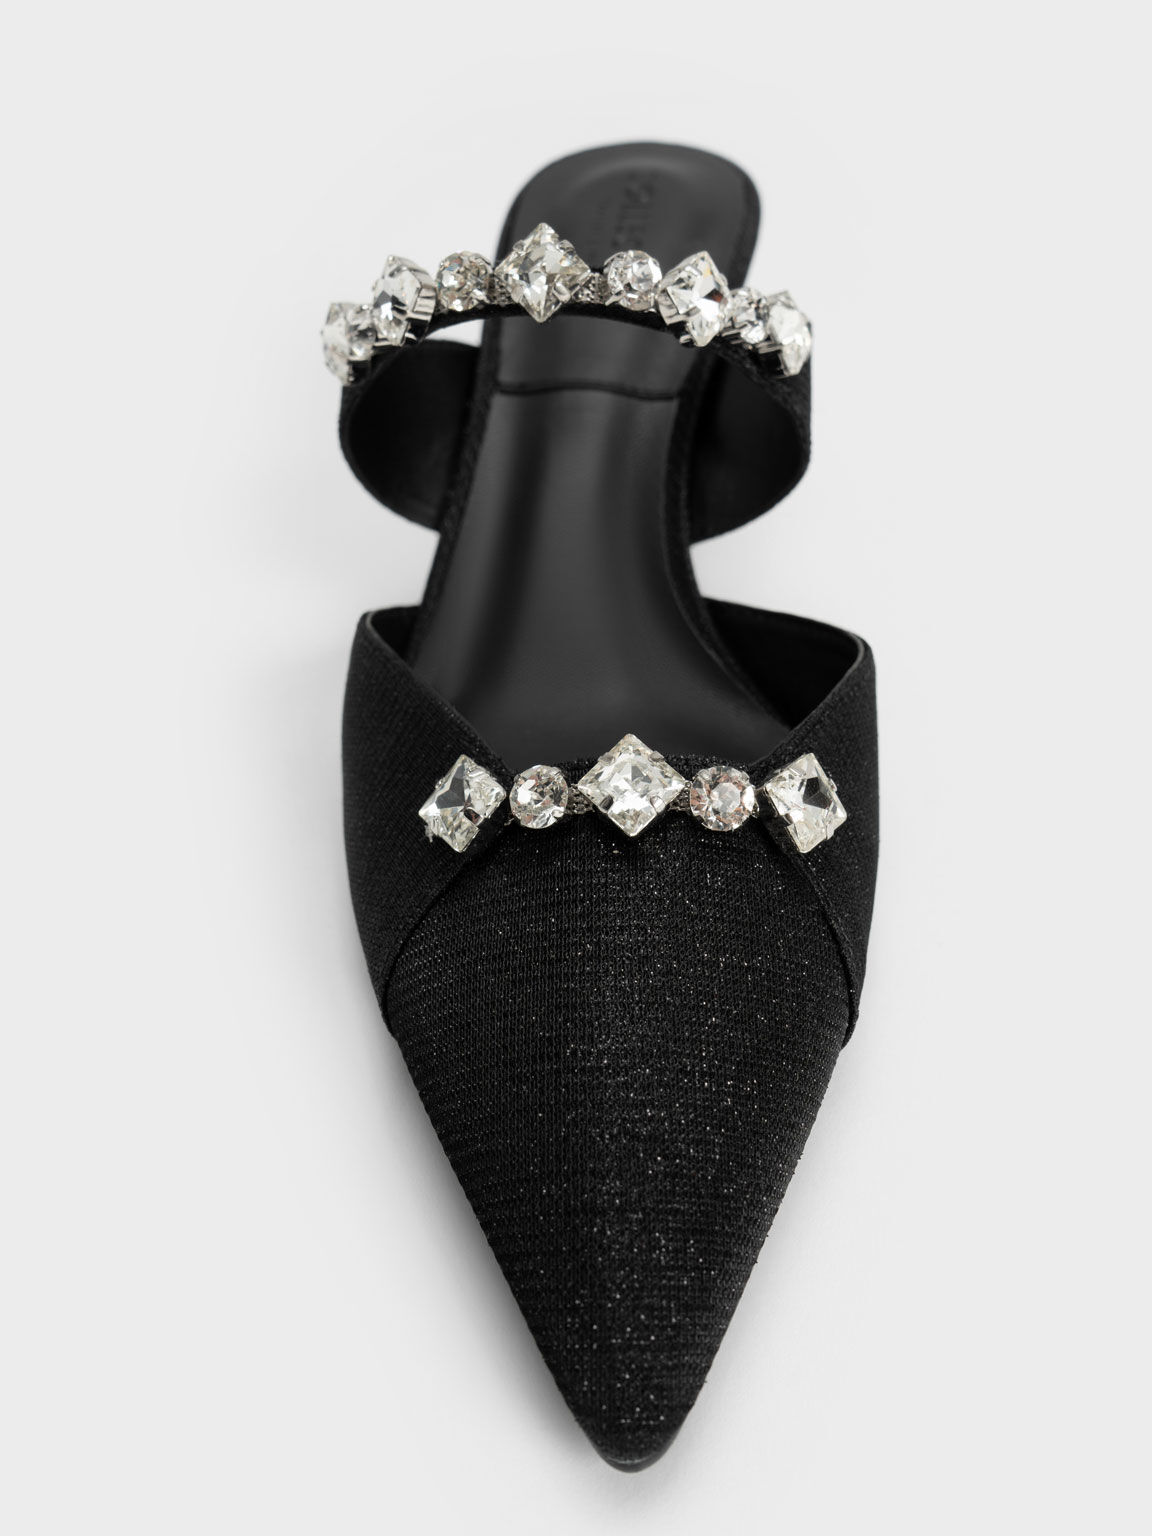 Sepatu Mules Glittered Gem-Embellished, Black, hi-res